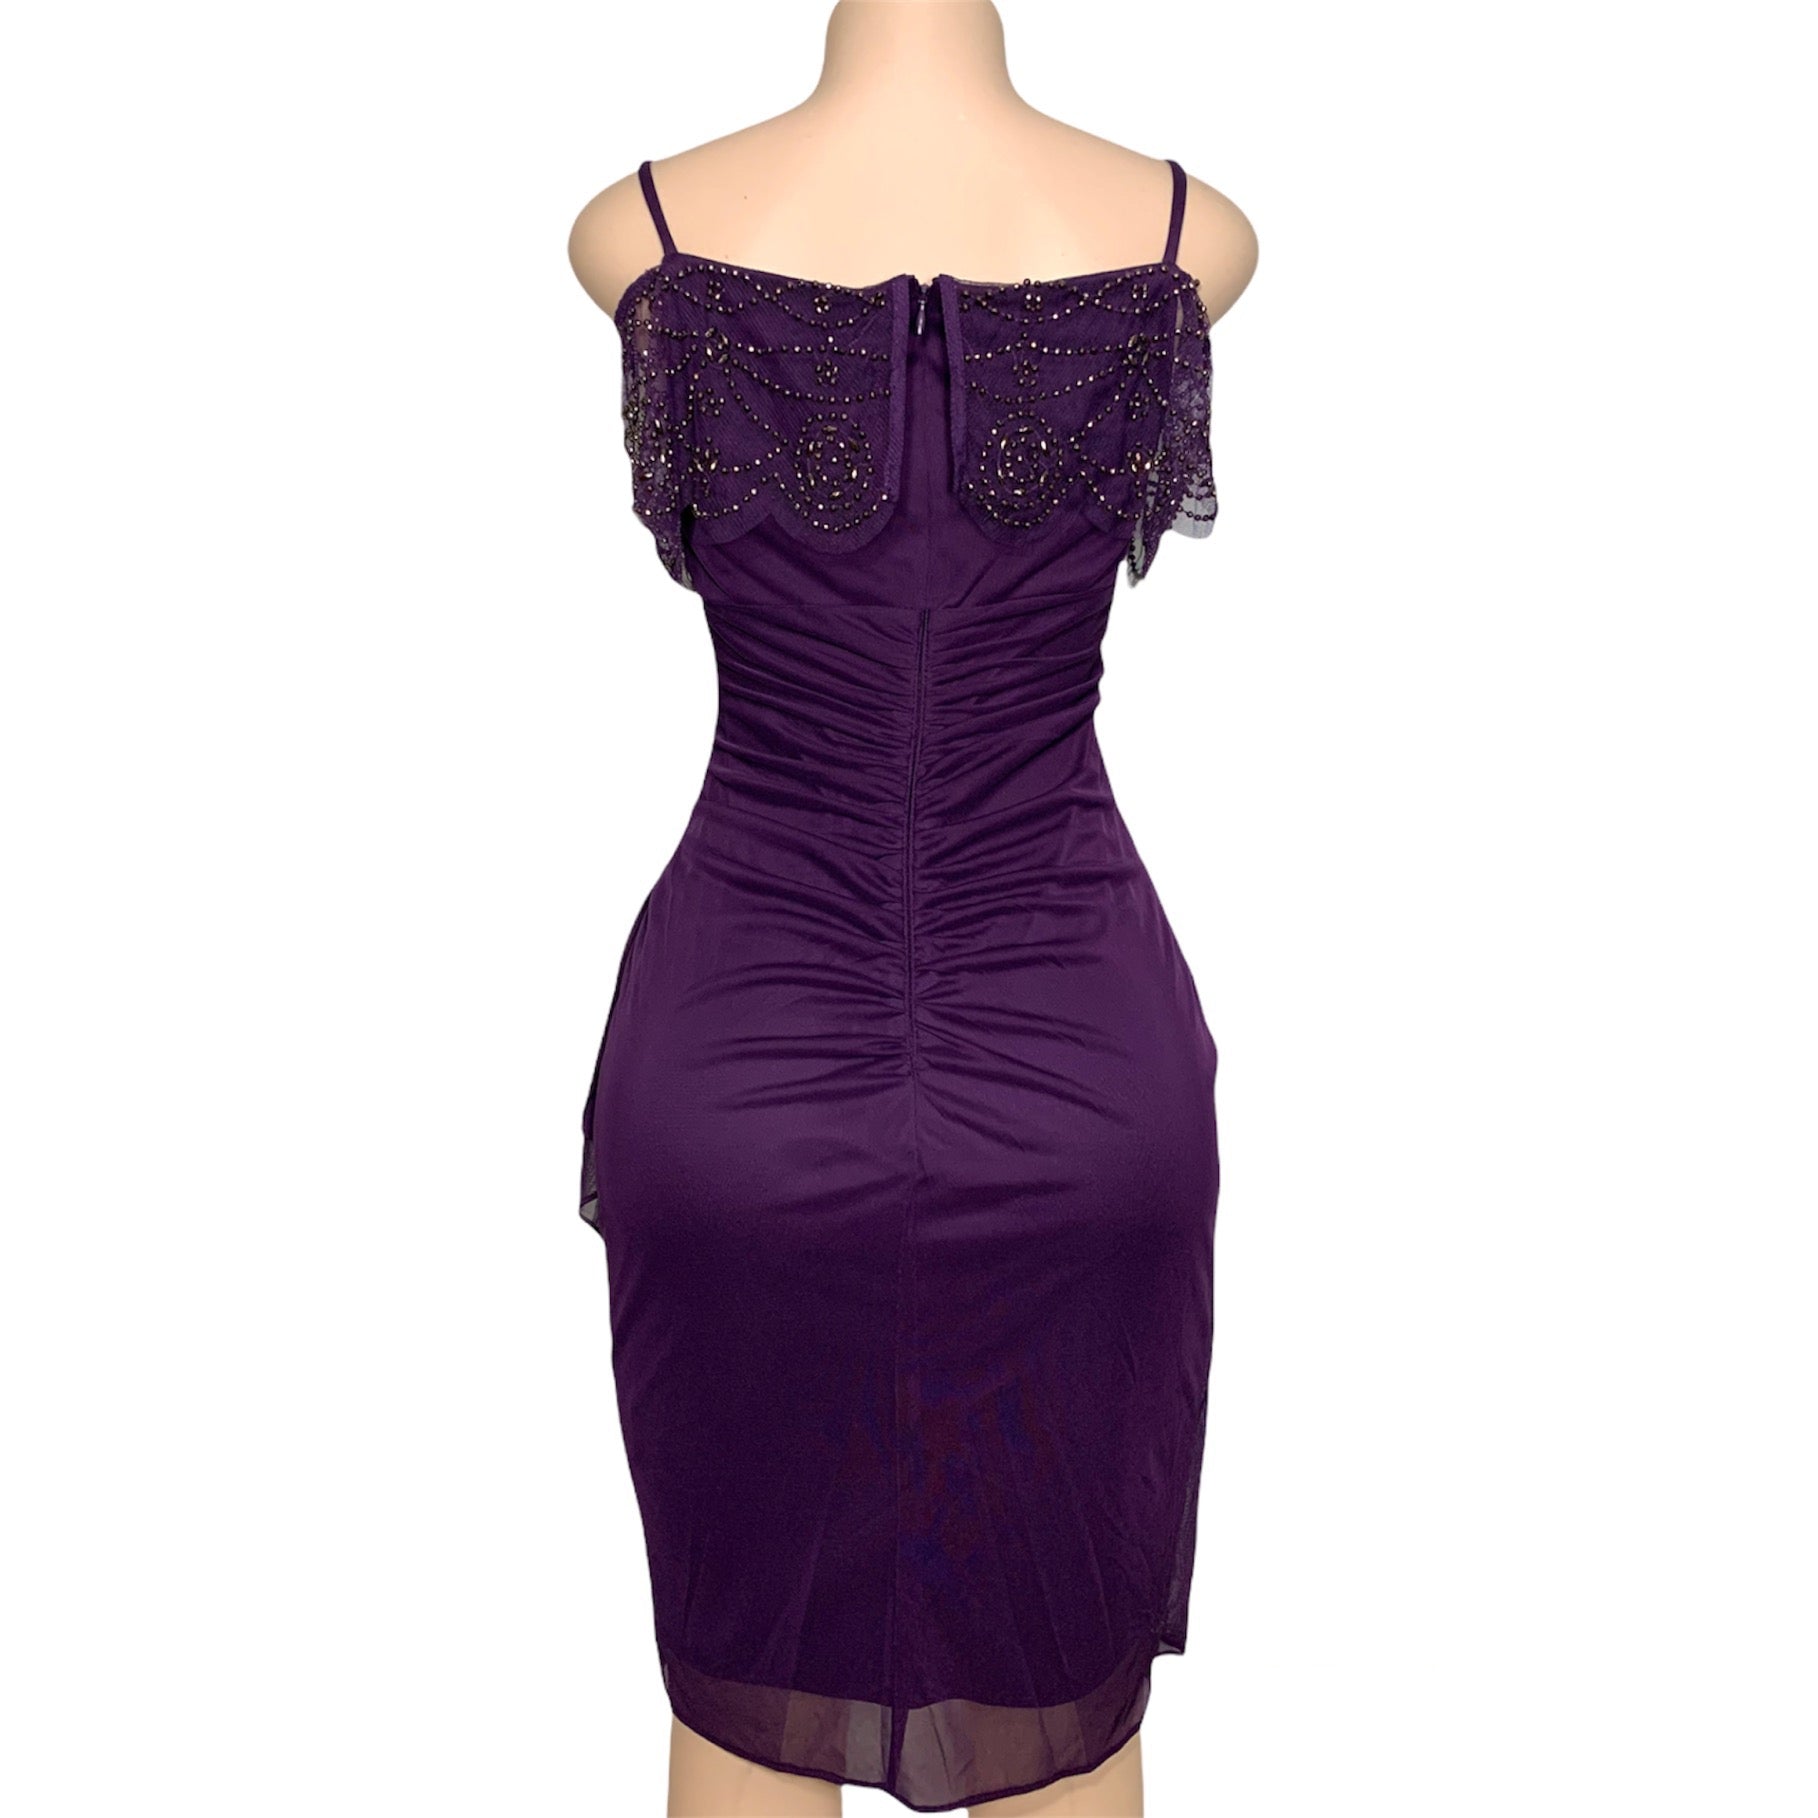 Purple Party Dress